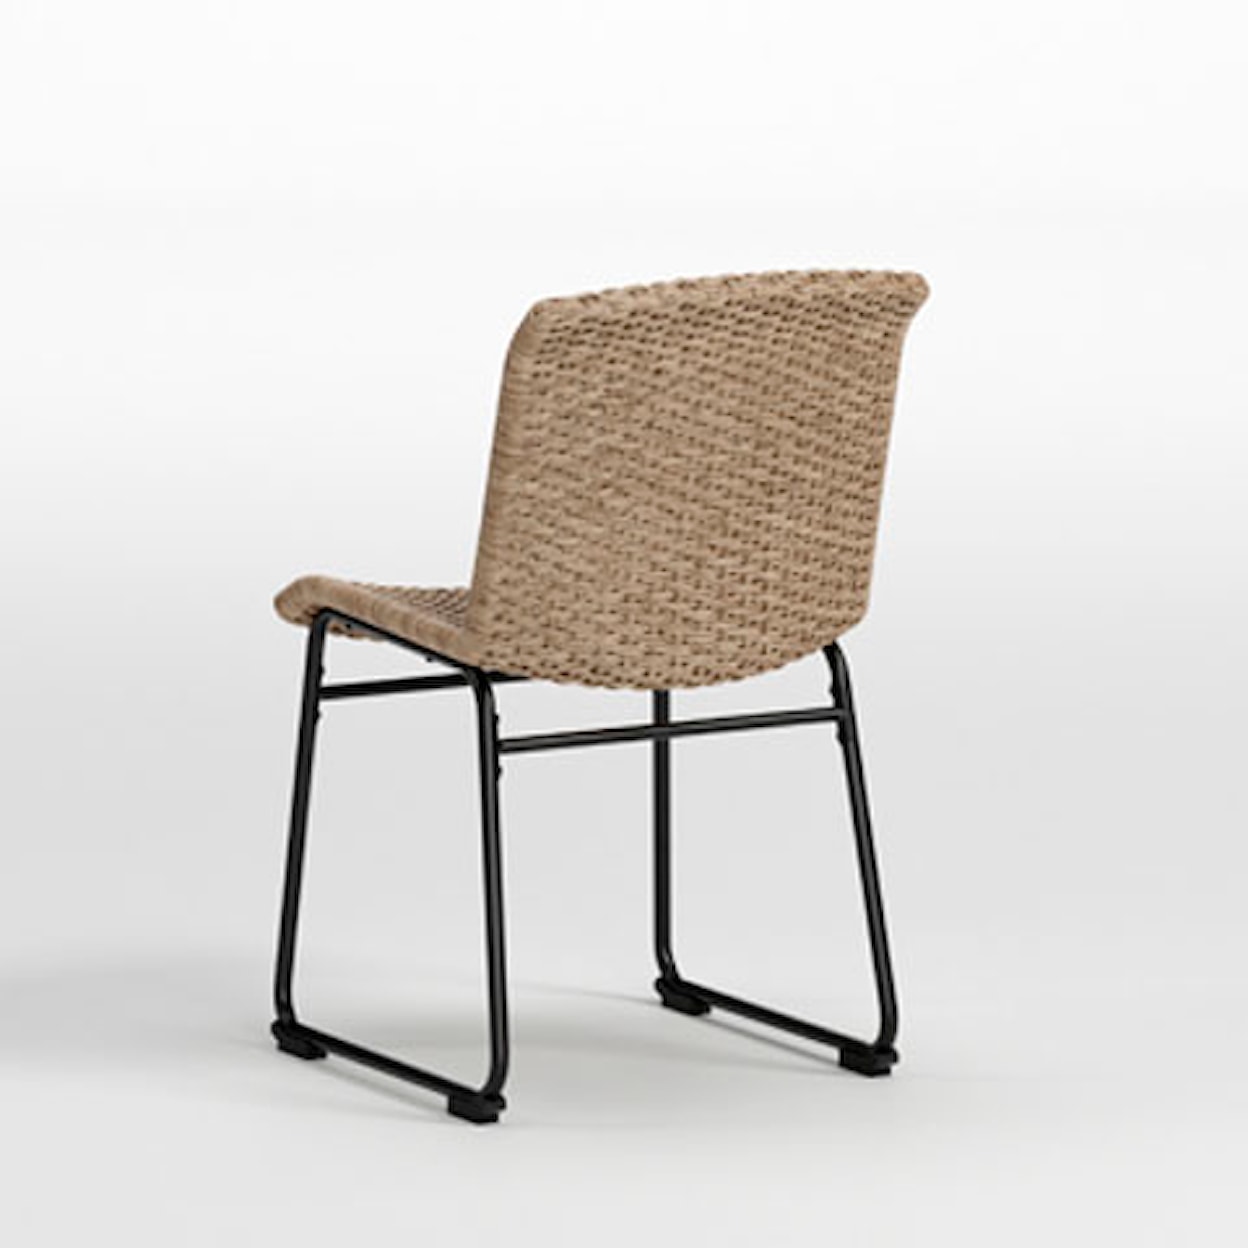 Ashley Furniture Signature Design Amaris Resin Wicker Outdoor Dining Chair